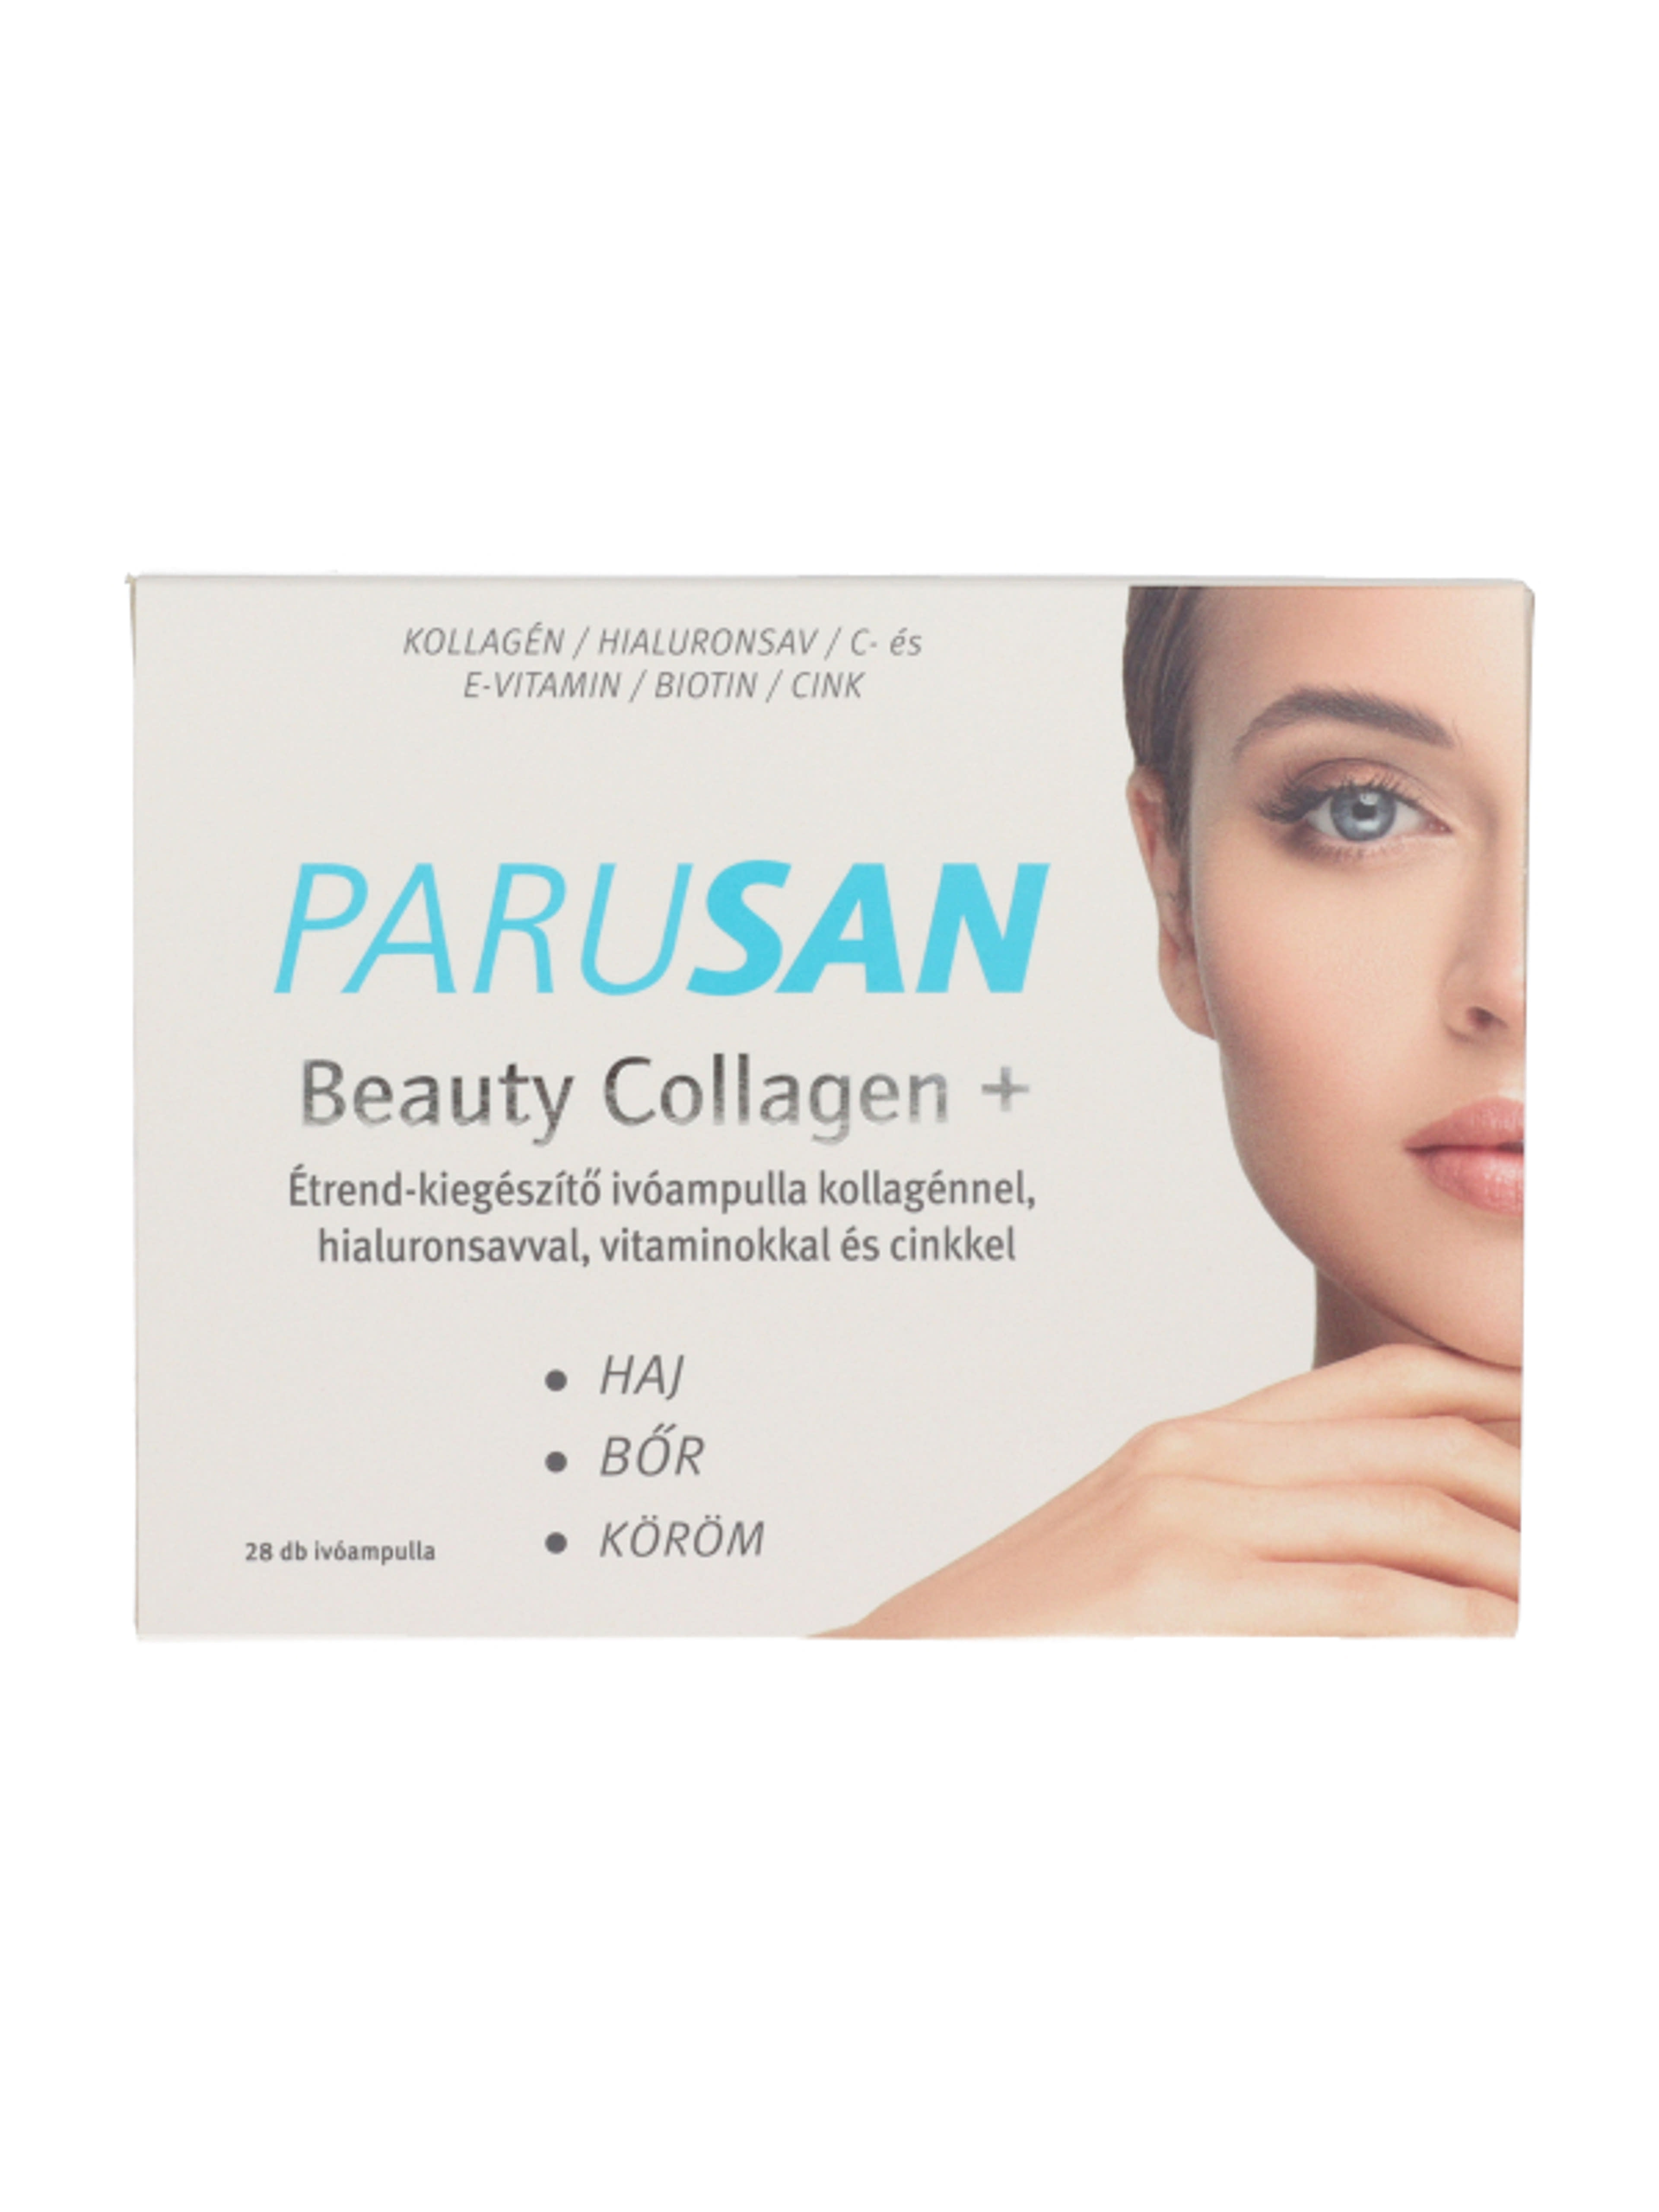 Parusan Beauty Collagen + kollagén és hialuronsav komplex - 28 db-2